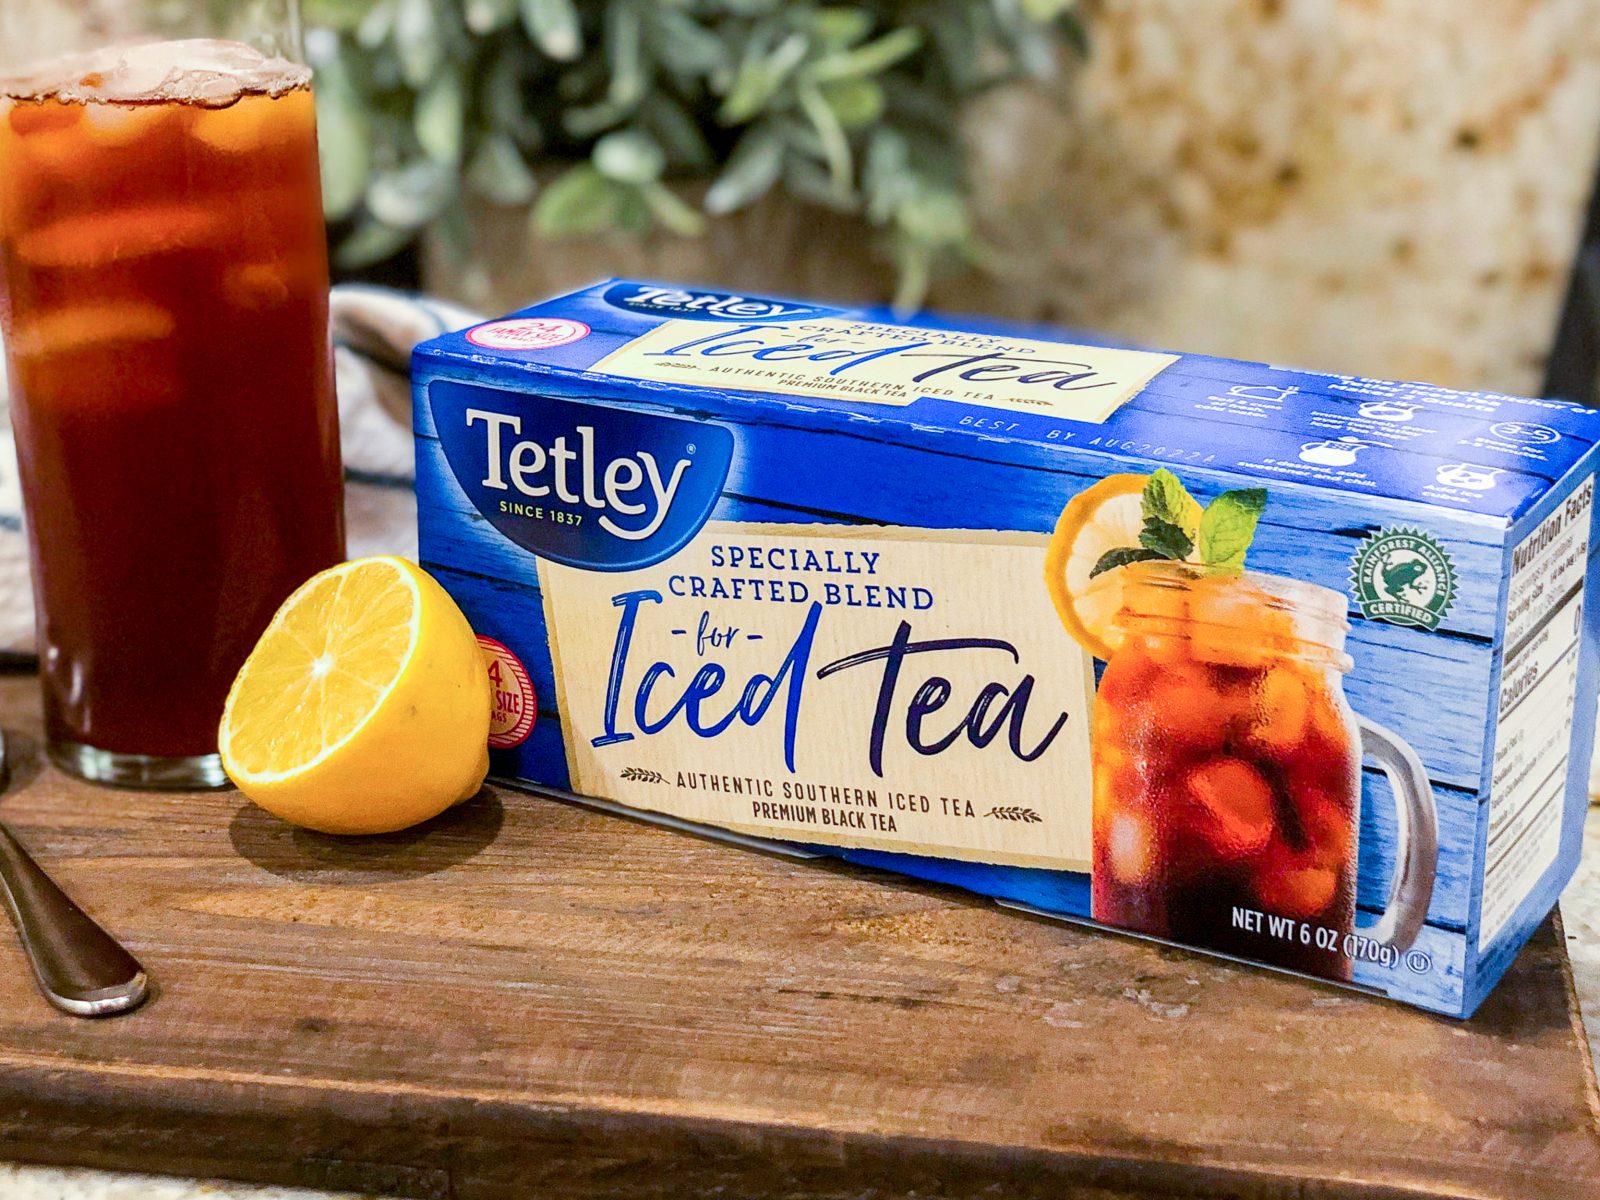 Tetley Tea Coupon Makes 24-Count Box Just $2.24 At Kroger